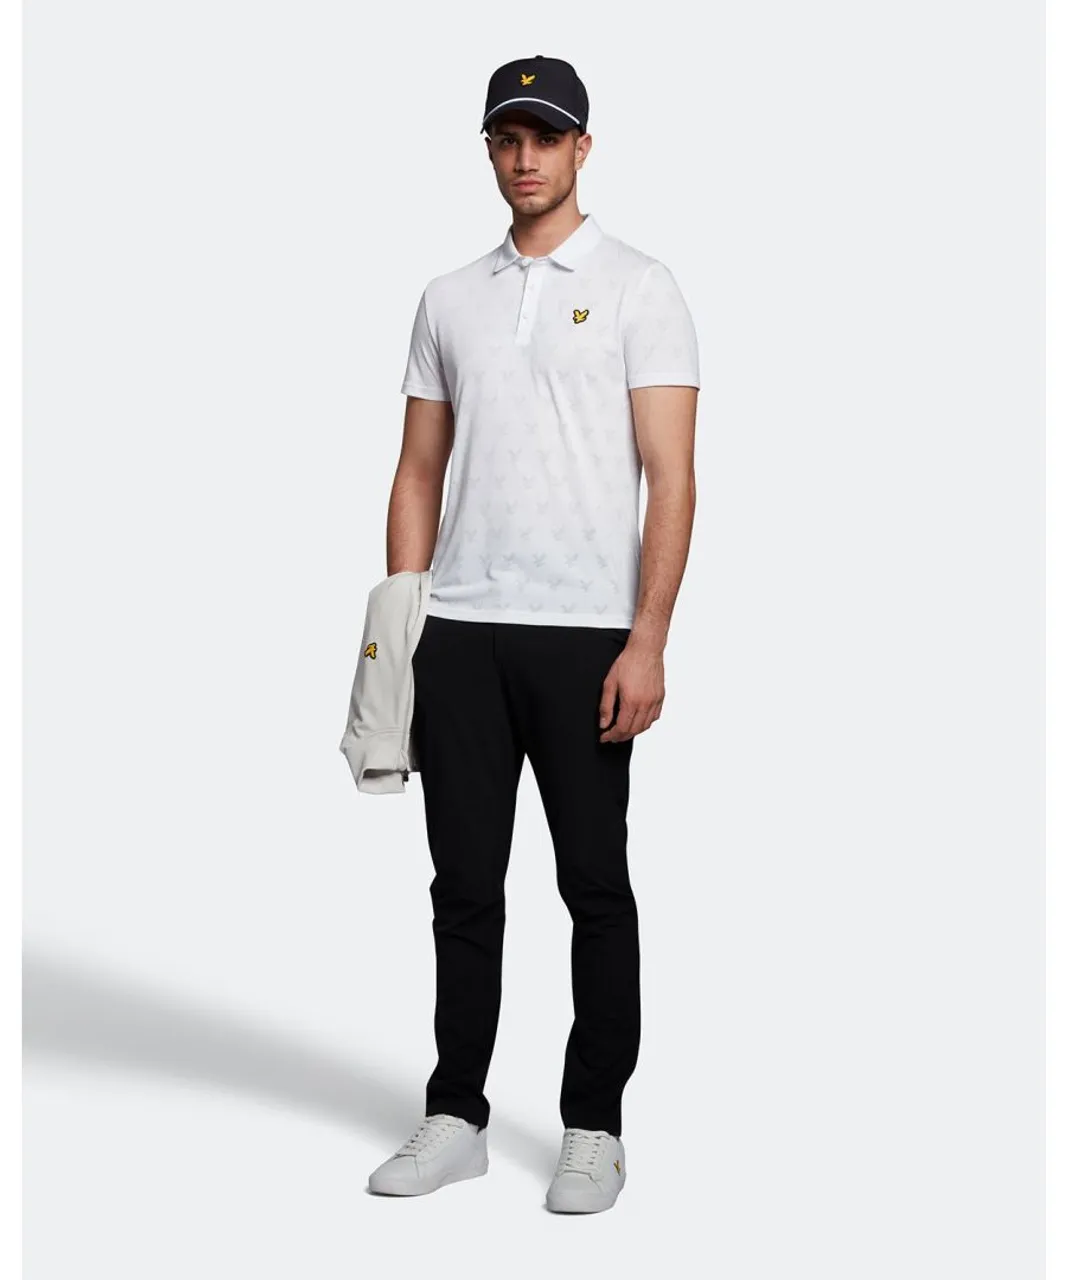 Lyle & Scott Mens Golf Jacquard Polo Shirt in White